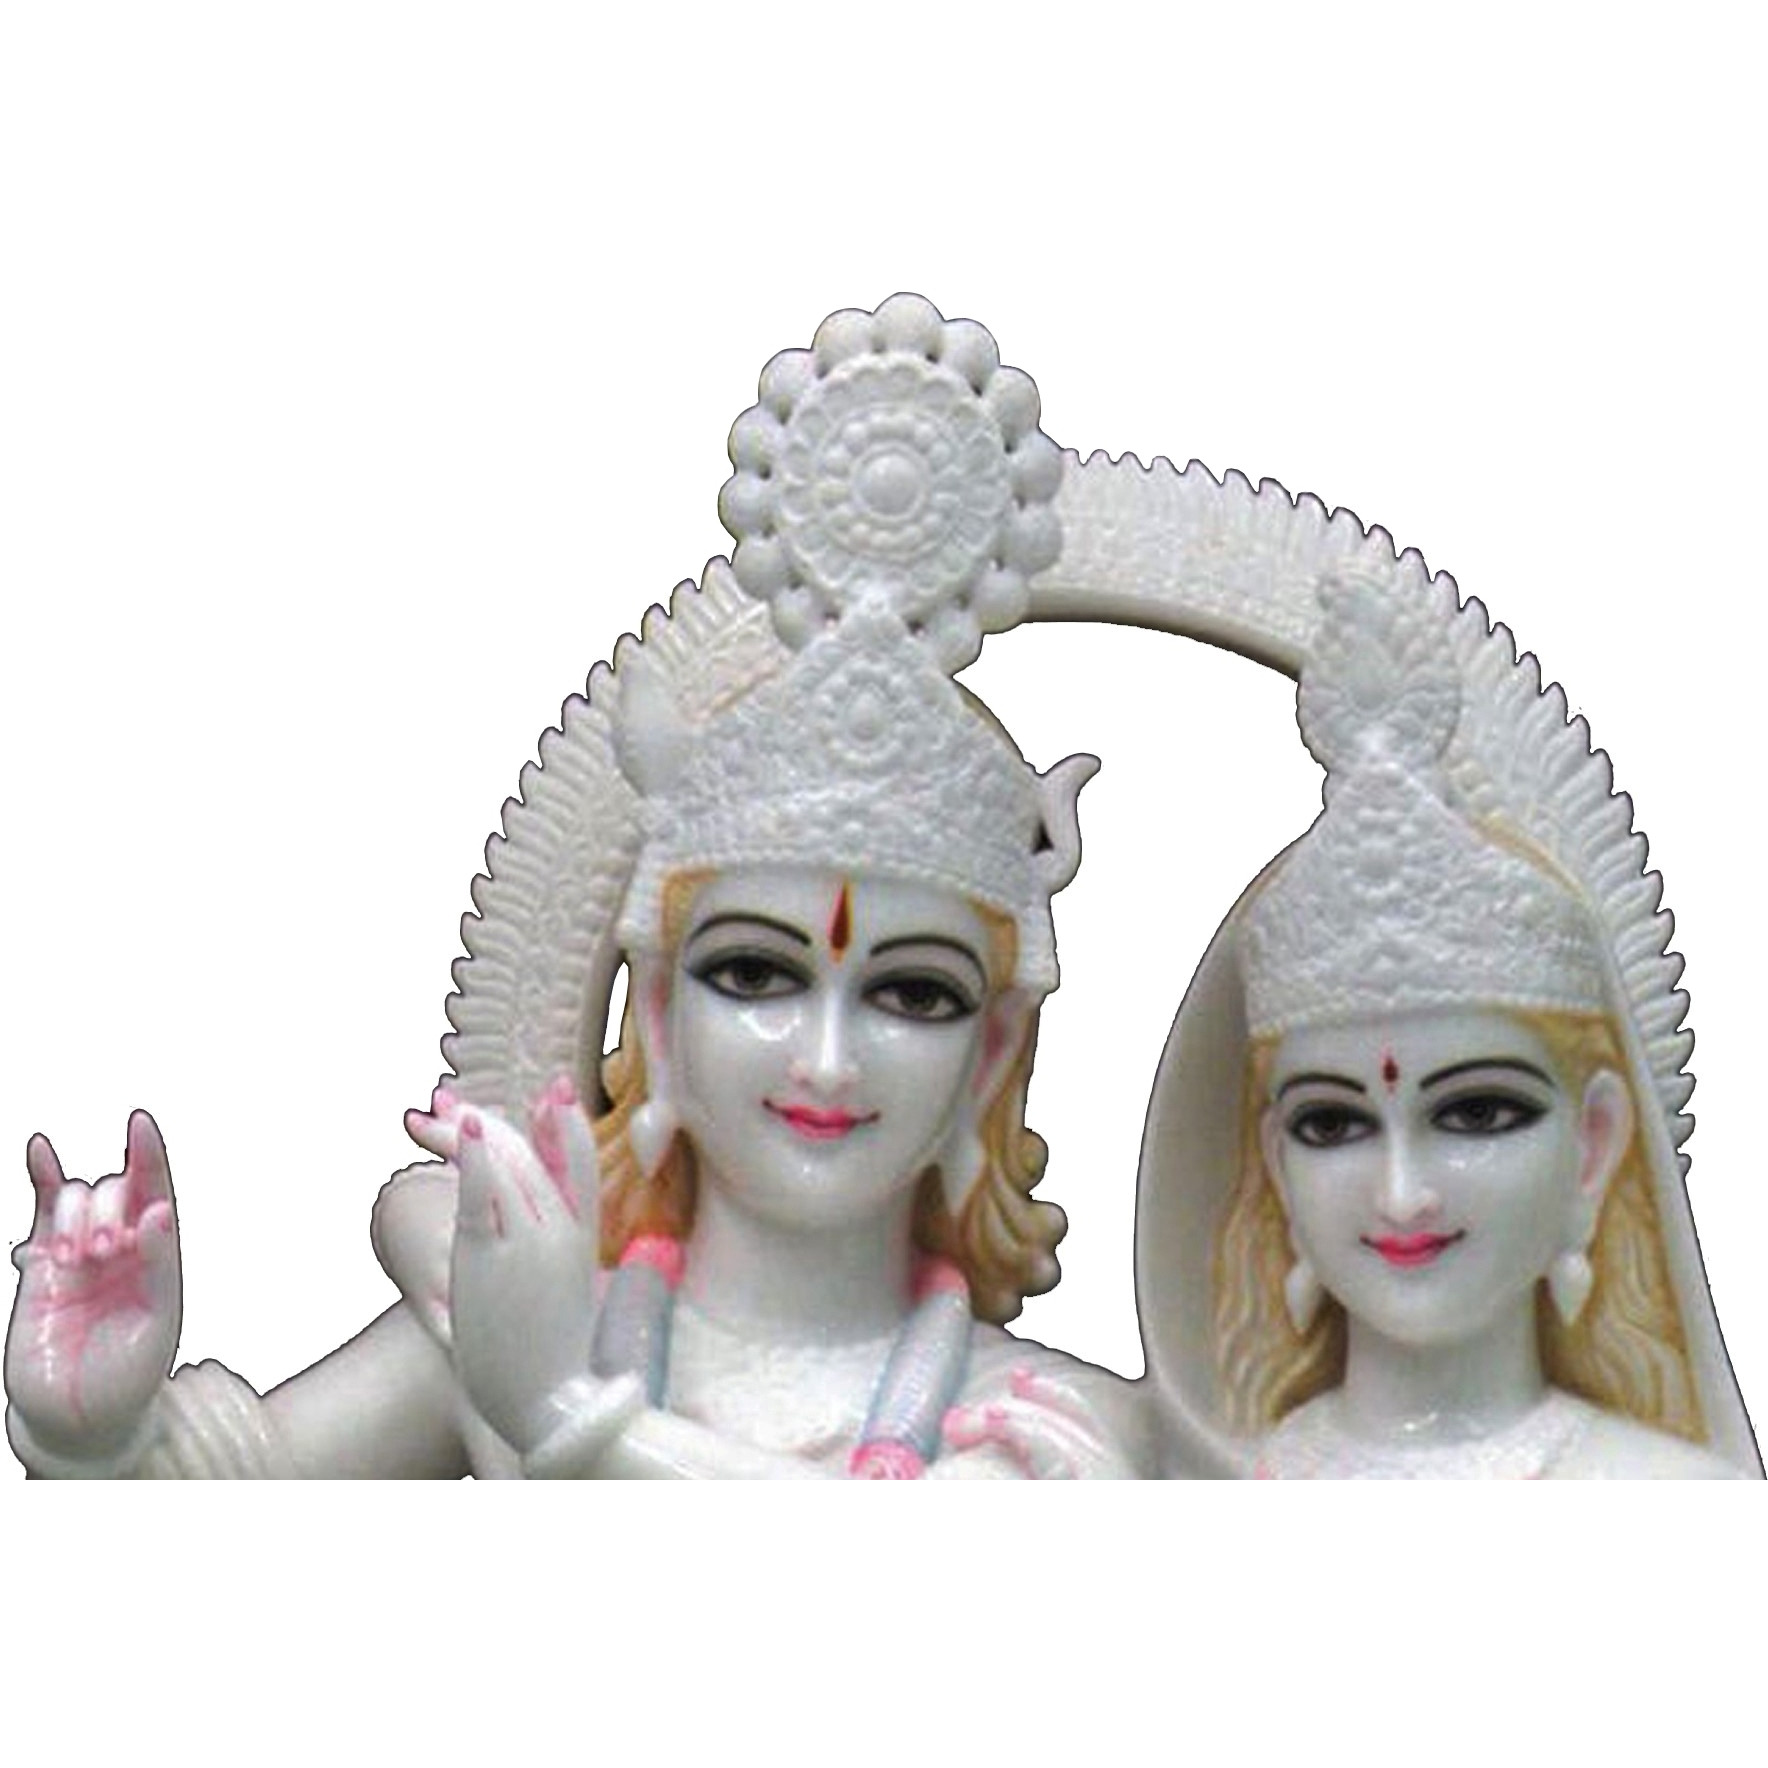 Marble Radha Krishna Statue, White Marble Radha Krishna Statues Beautiful Hand Carved Mandir, Pooja Room Decor Statues